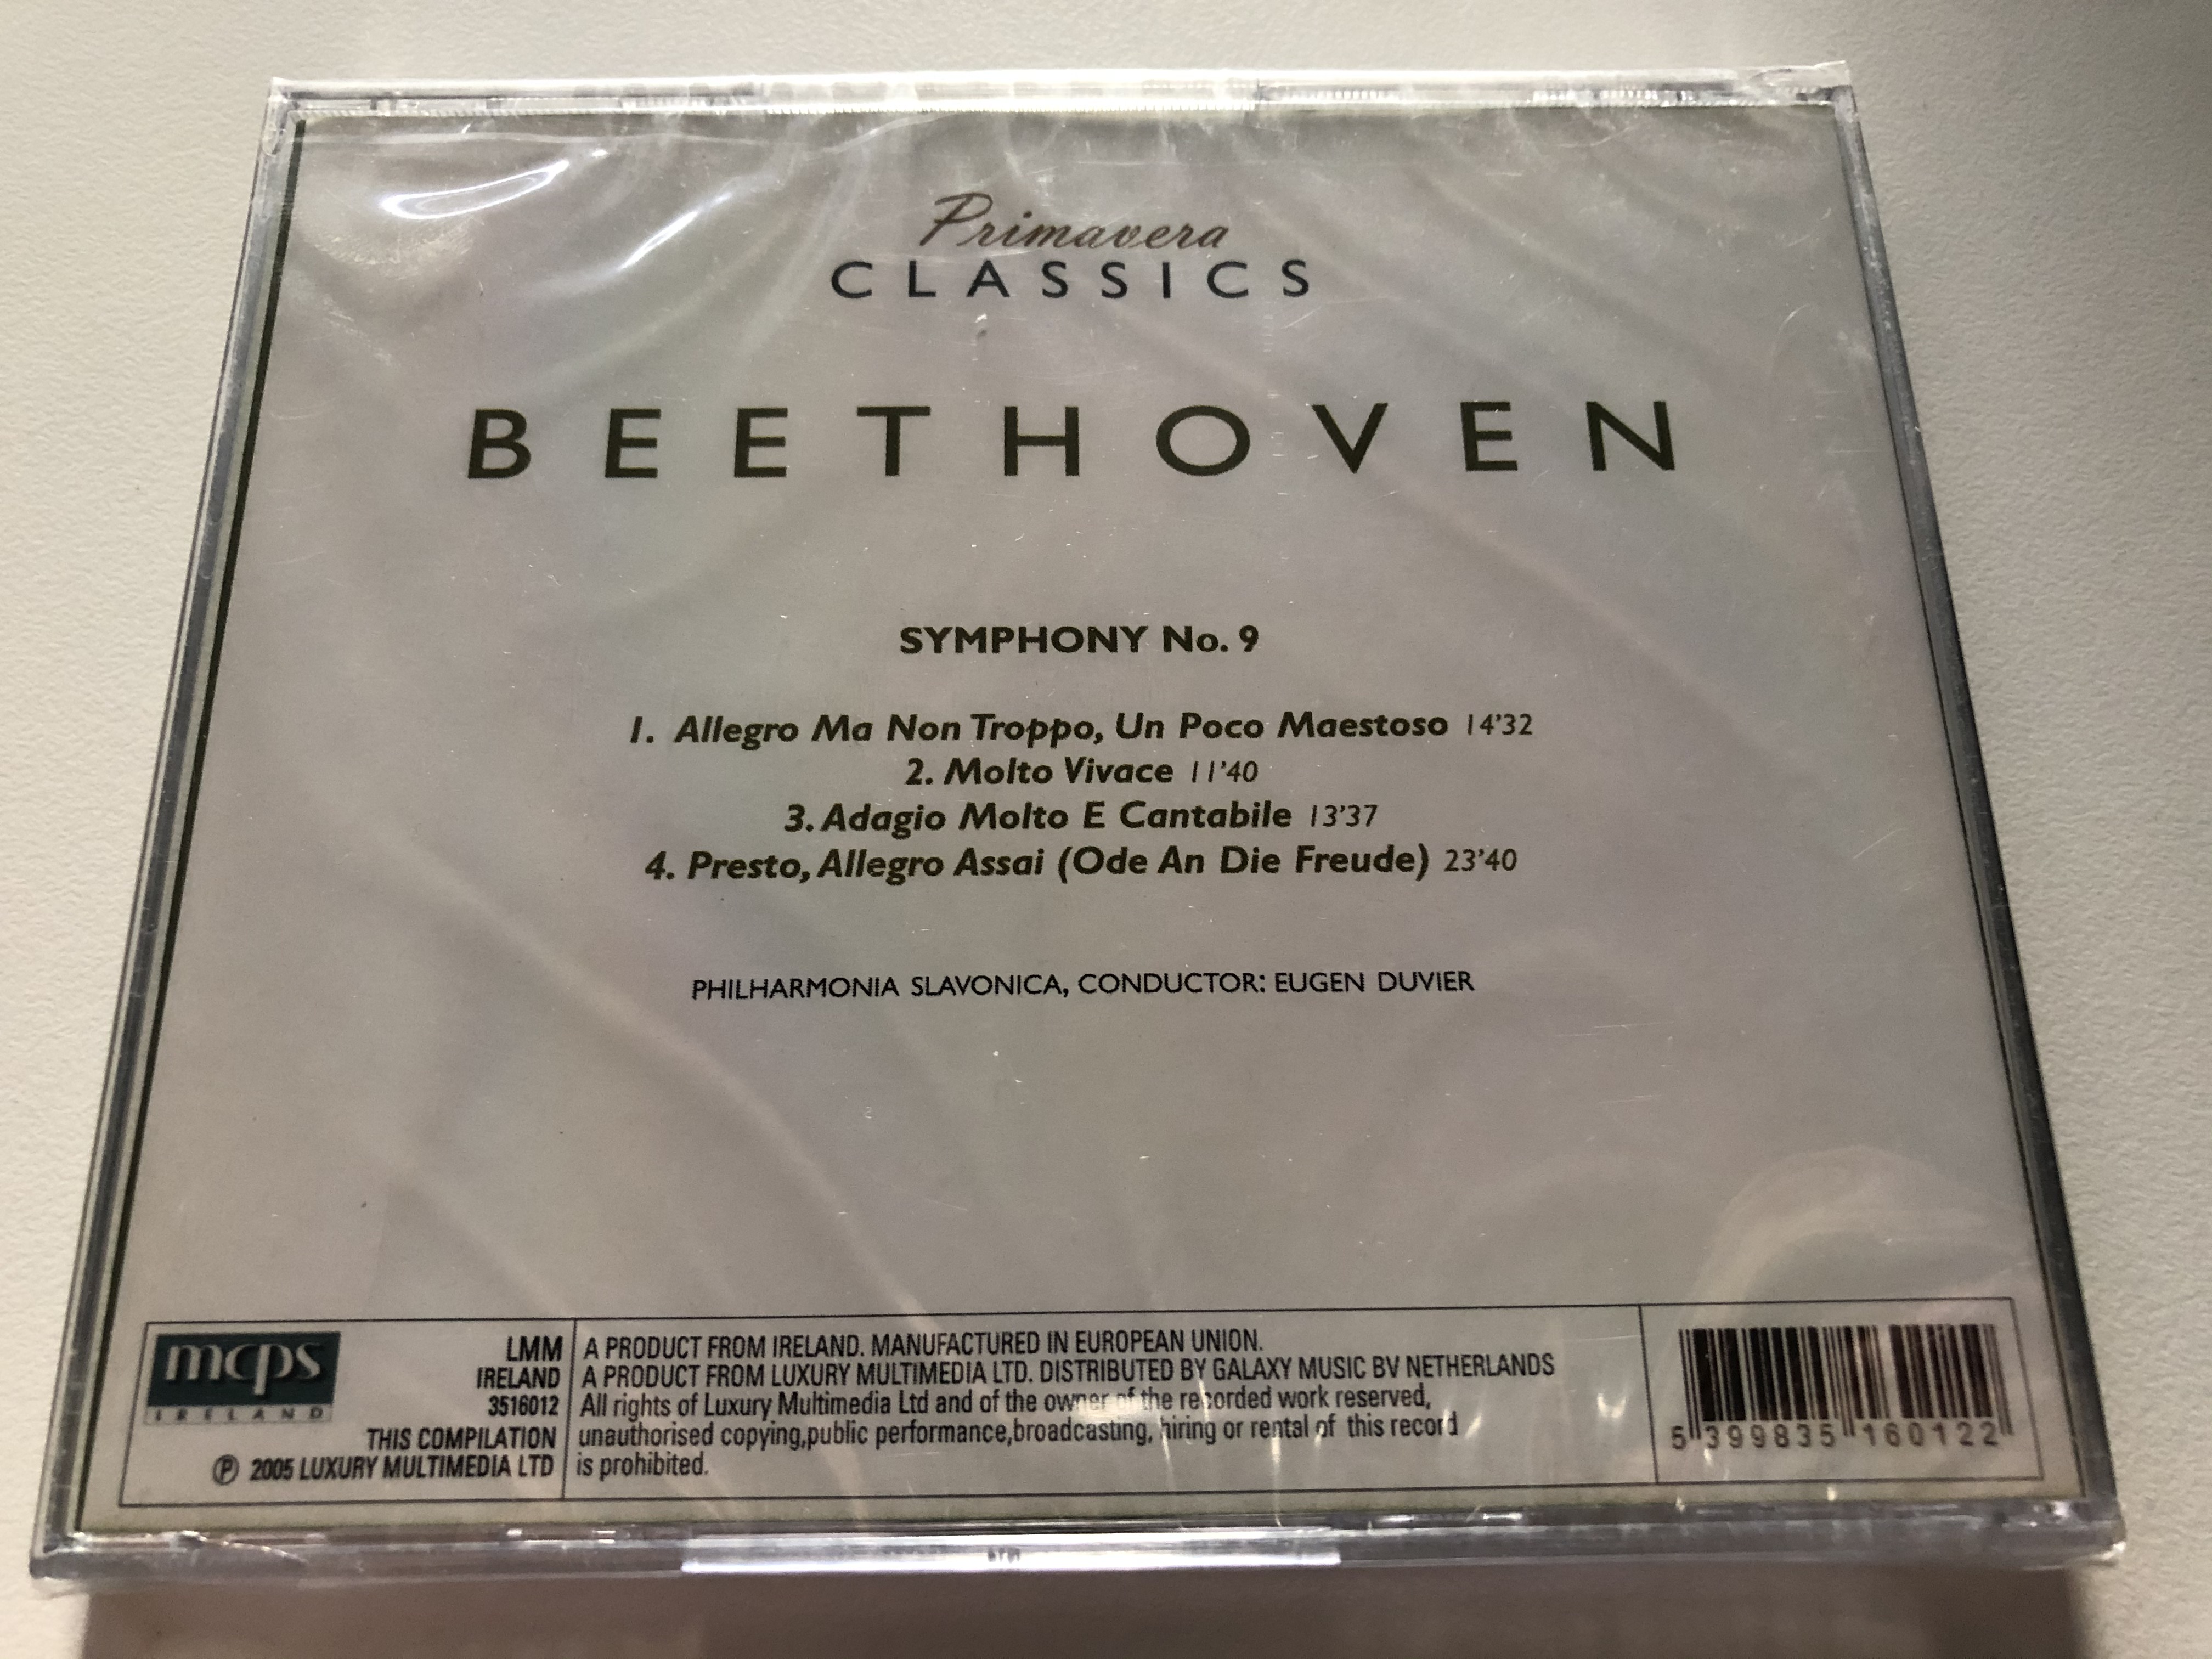 primavera-classics-beethoven-symphony-no-9-philharmonica-slavonica-conductor-eugene-duvier-lmm-audio-cd-2005-3516012-2-.jpg